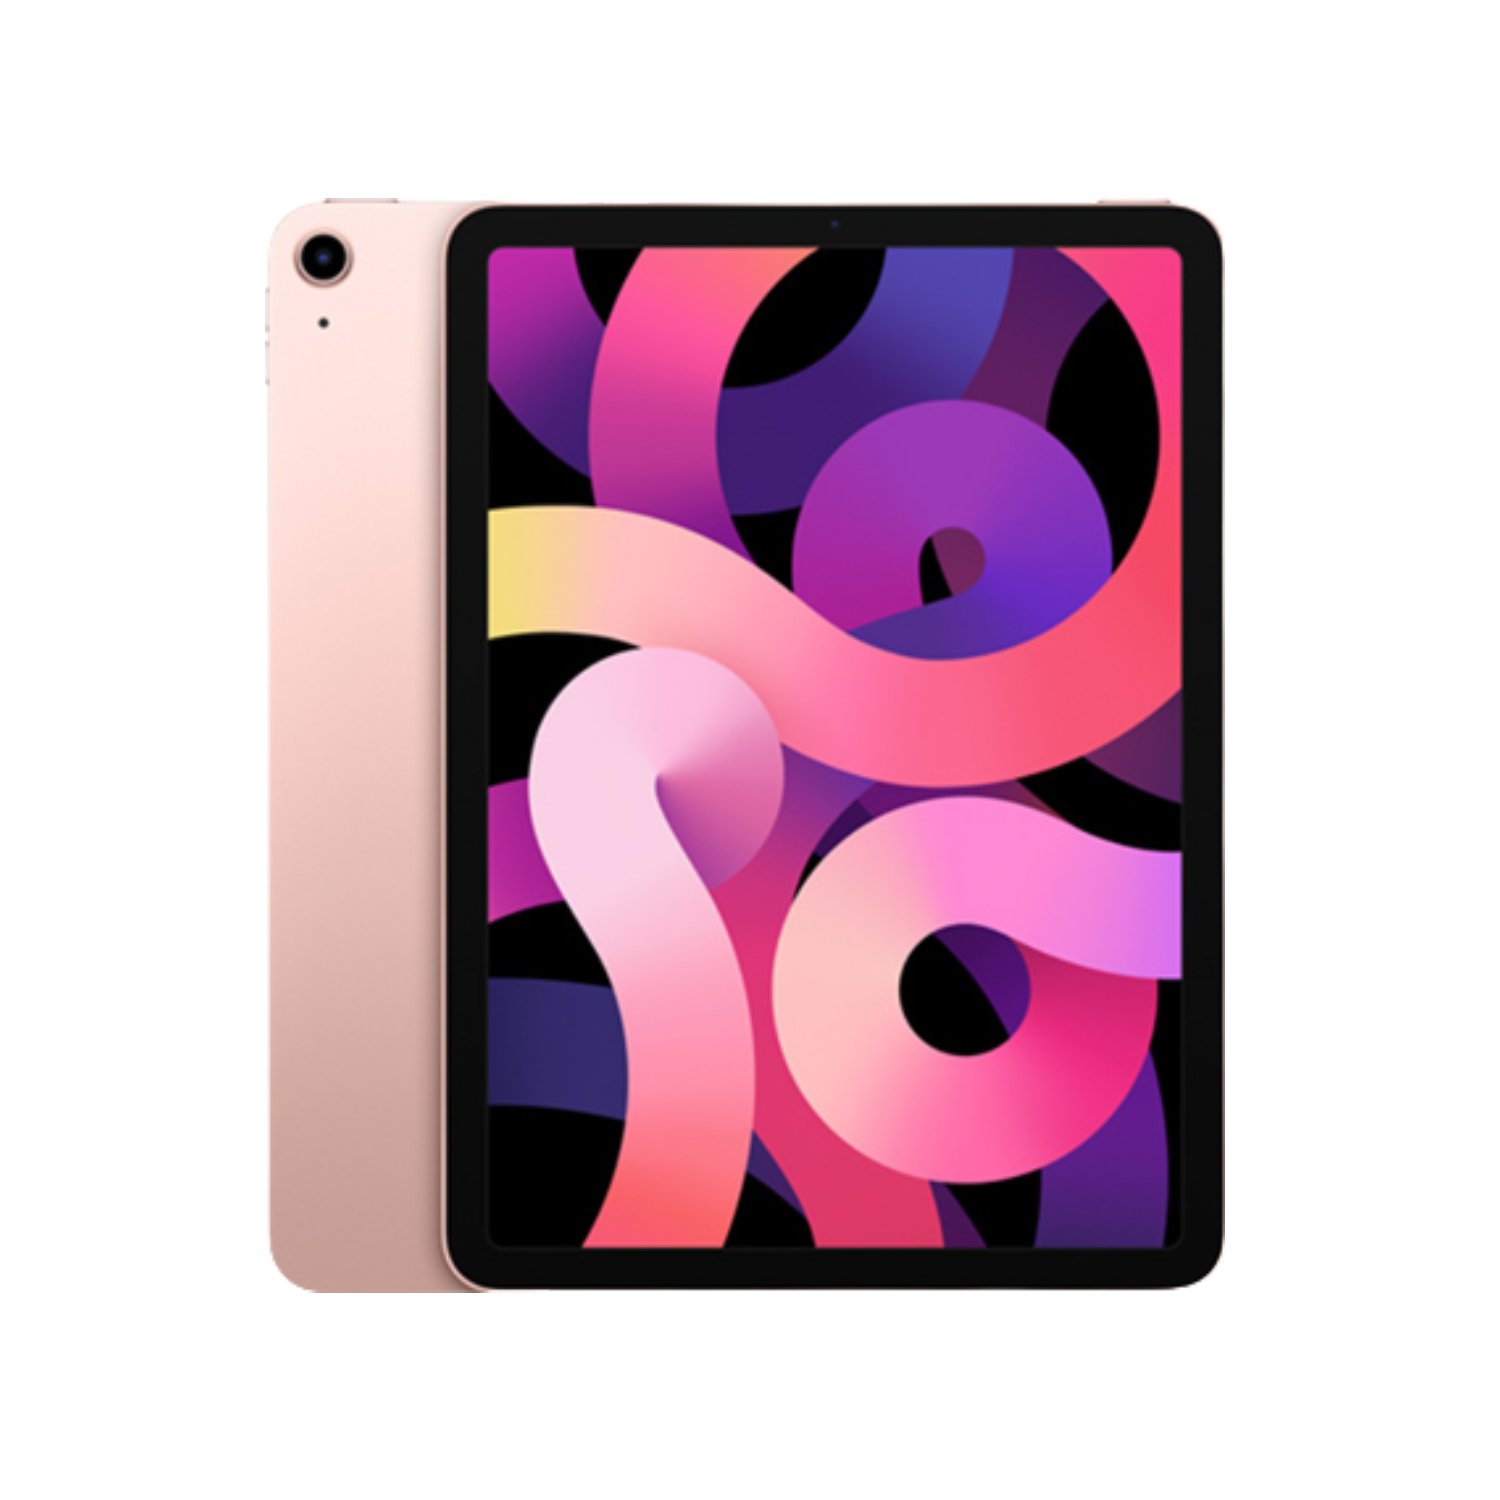 Apple iPad Air 4 Wi-Fi 64GB Rose Gold 10.9-inch 2020